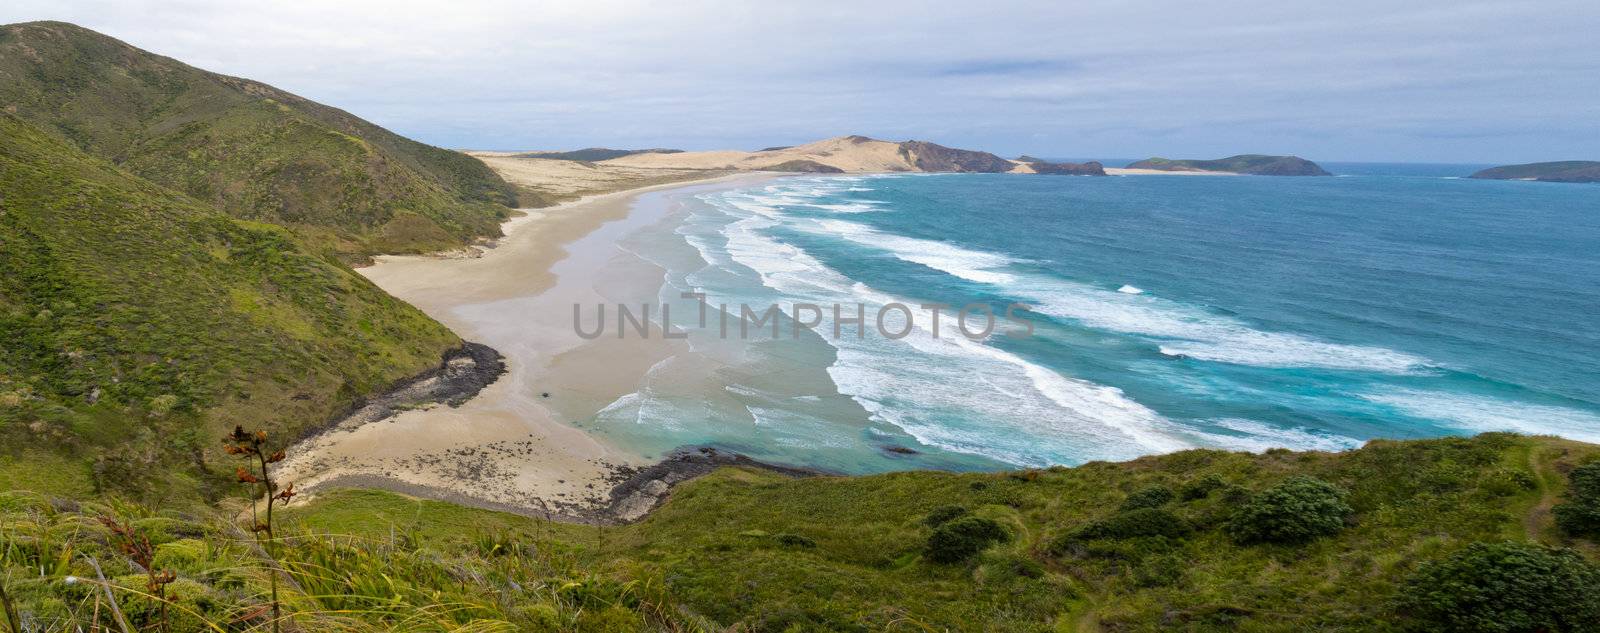 Northland sand beach near Cape Reinga New Zealand by PiLens